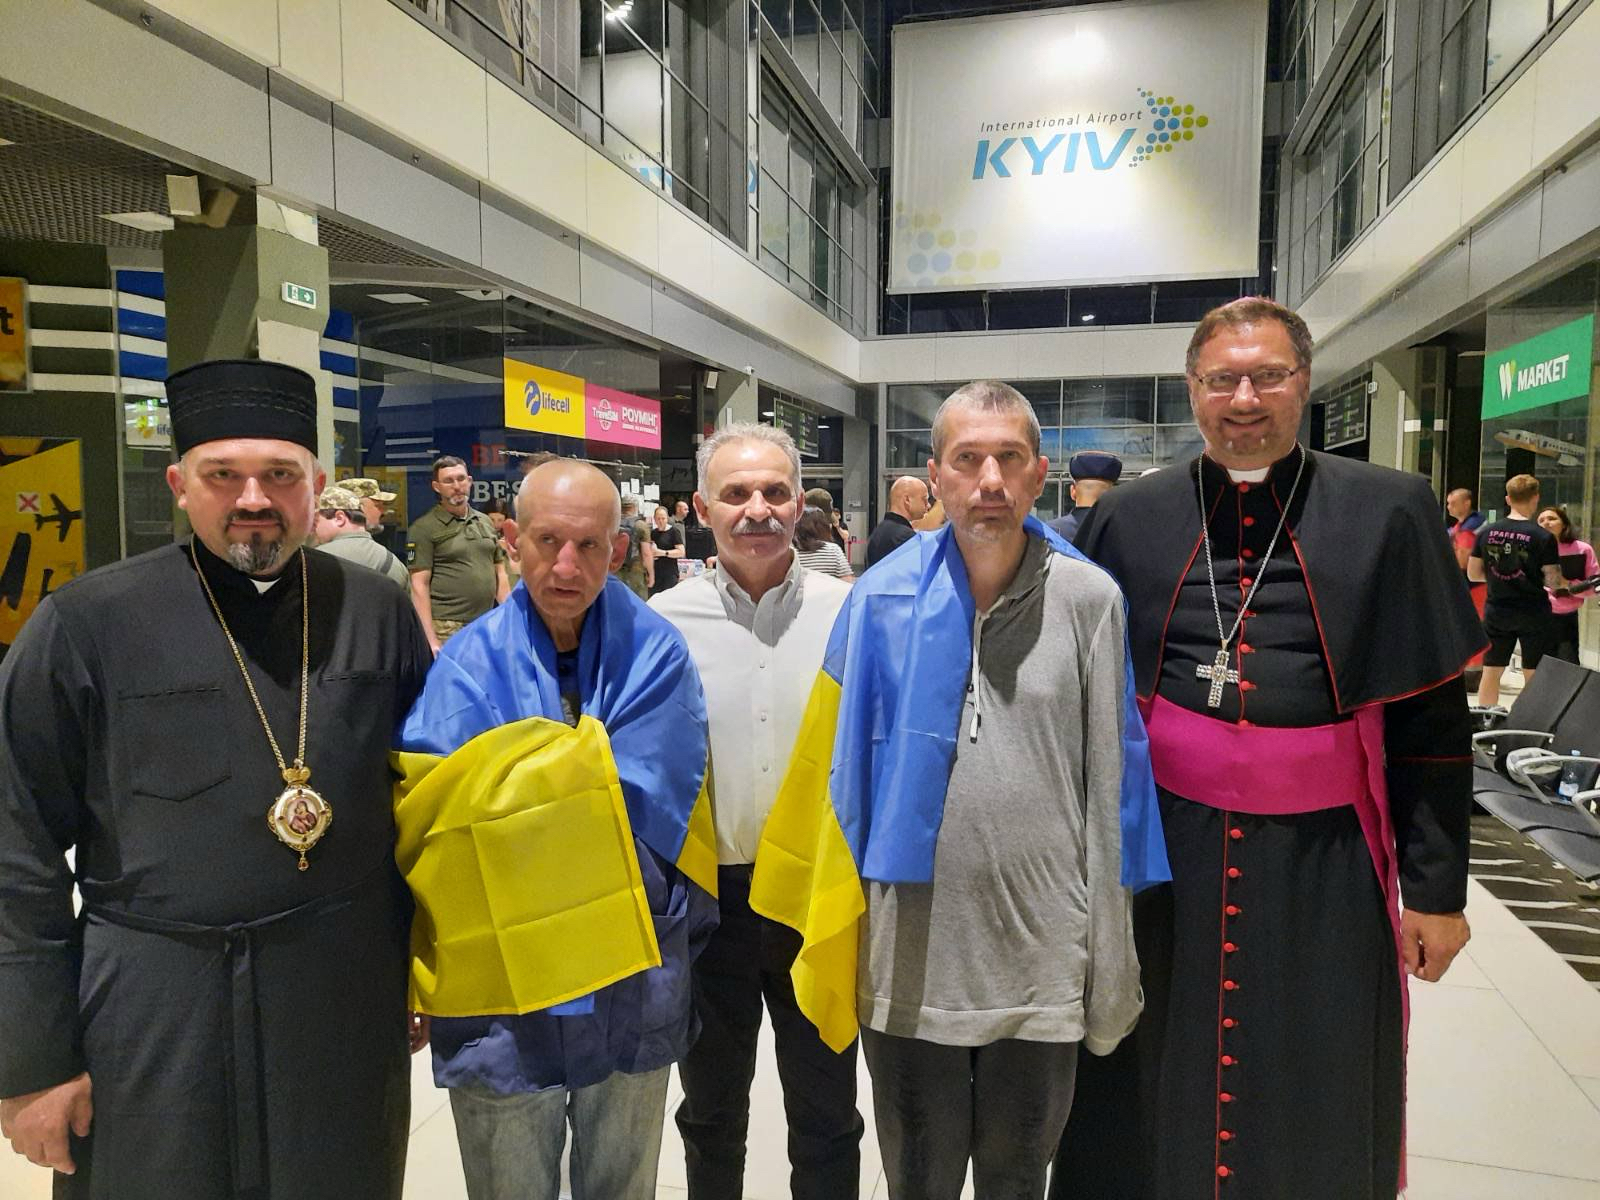 Ukrainian priests in the Kyiv airport.